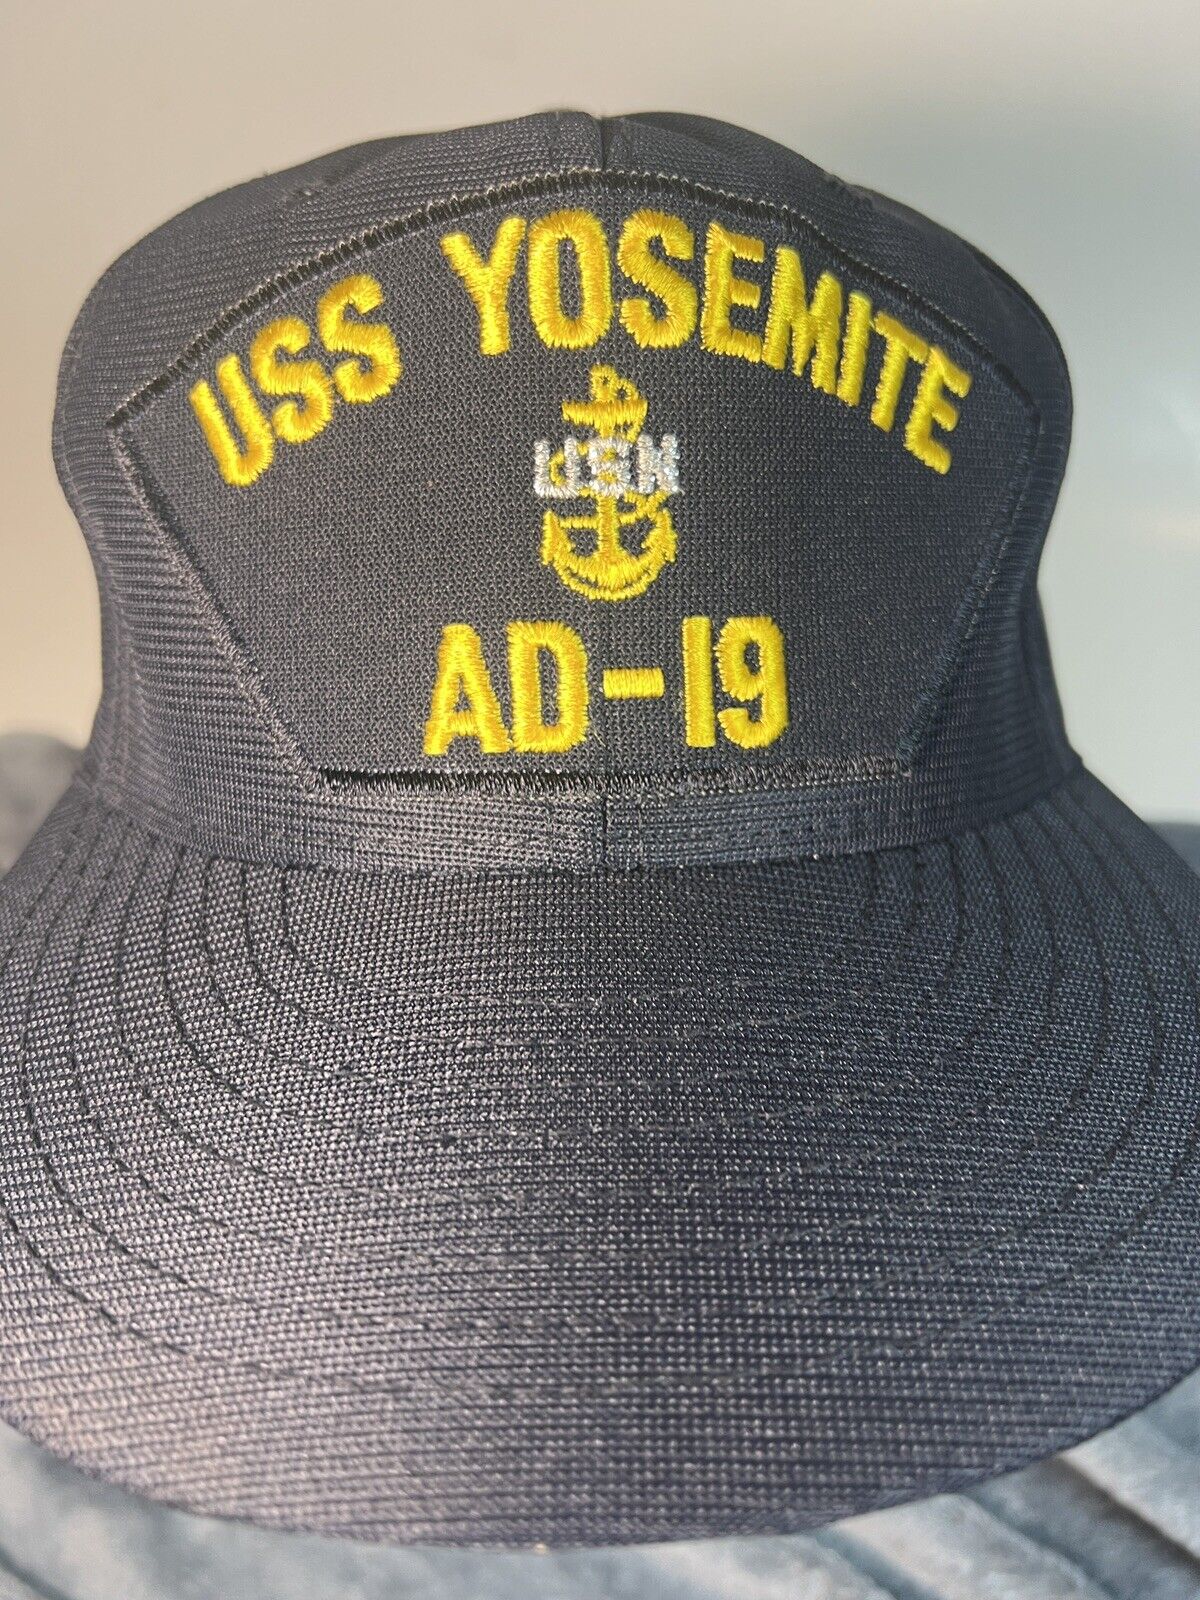 US Navy USN Ship baseball hat/cap USS YOSEMITE AD-19 Naval military crew